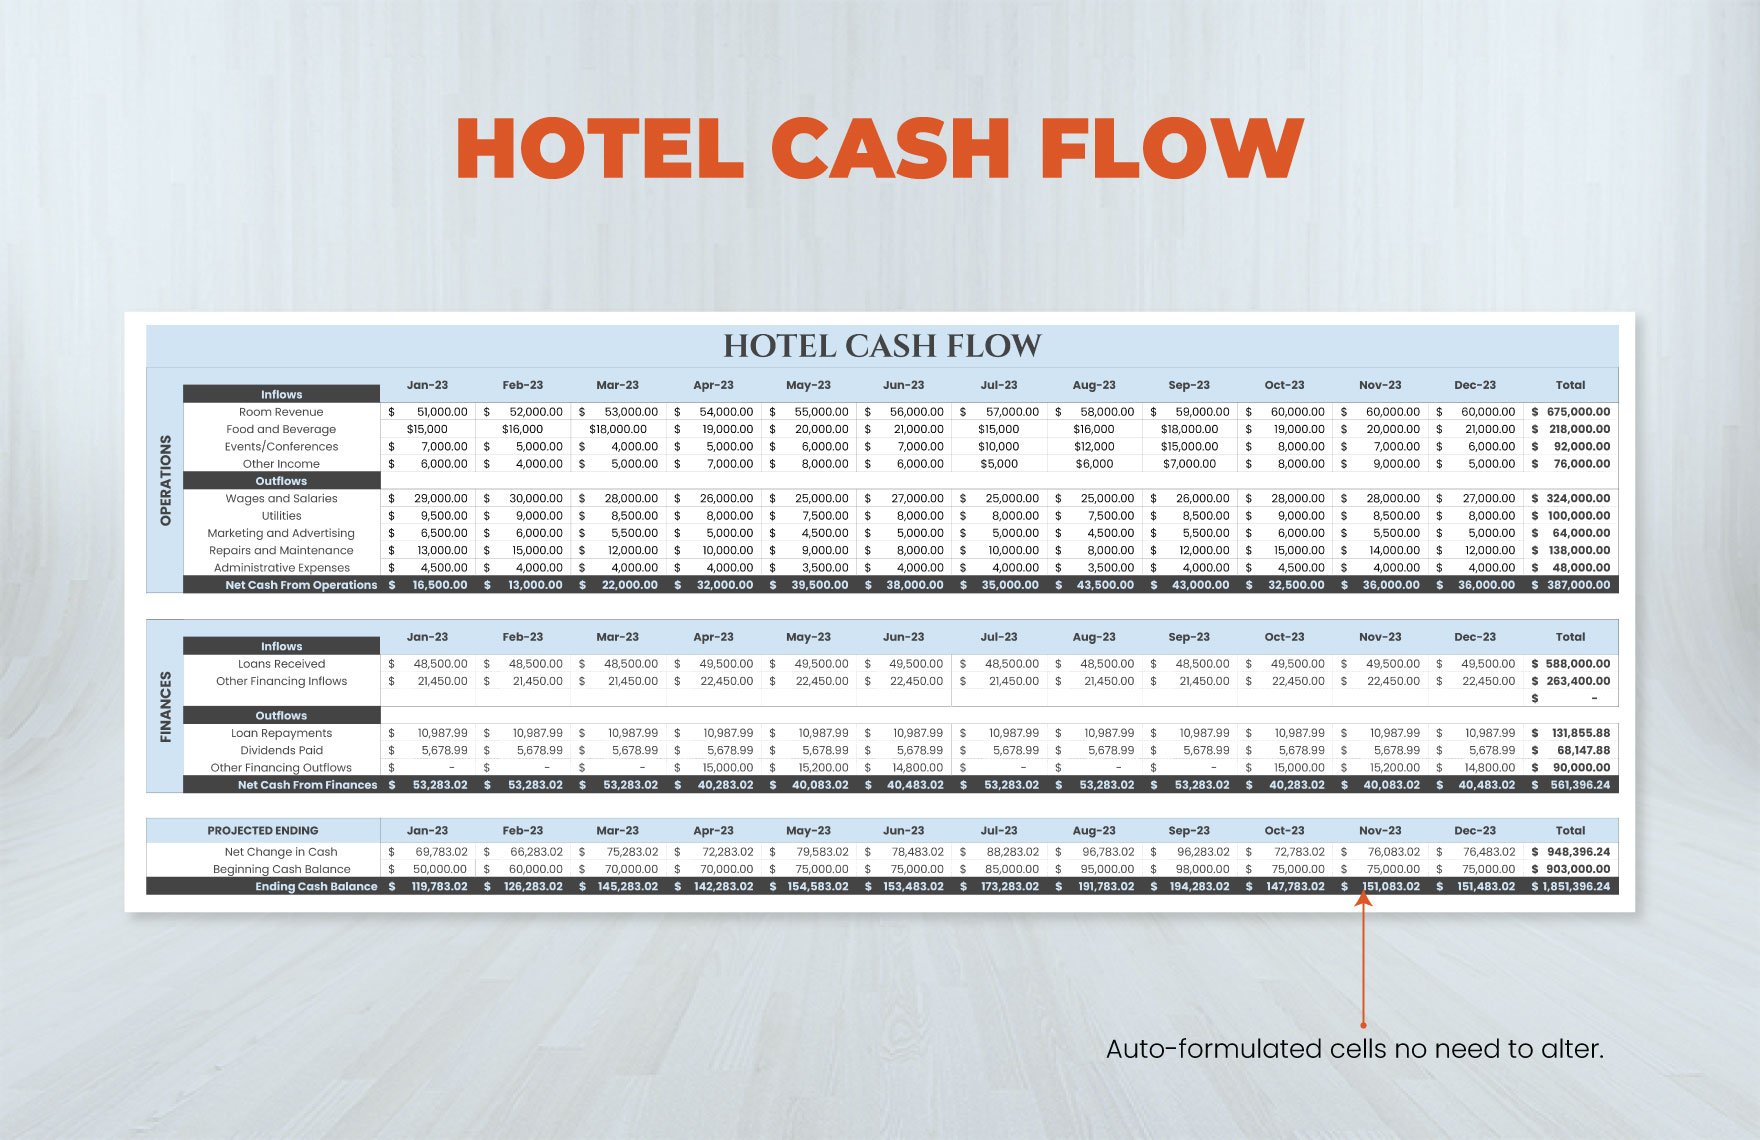 Hotel Cash Flow Template